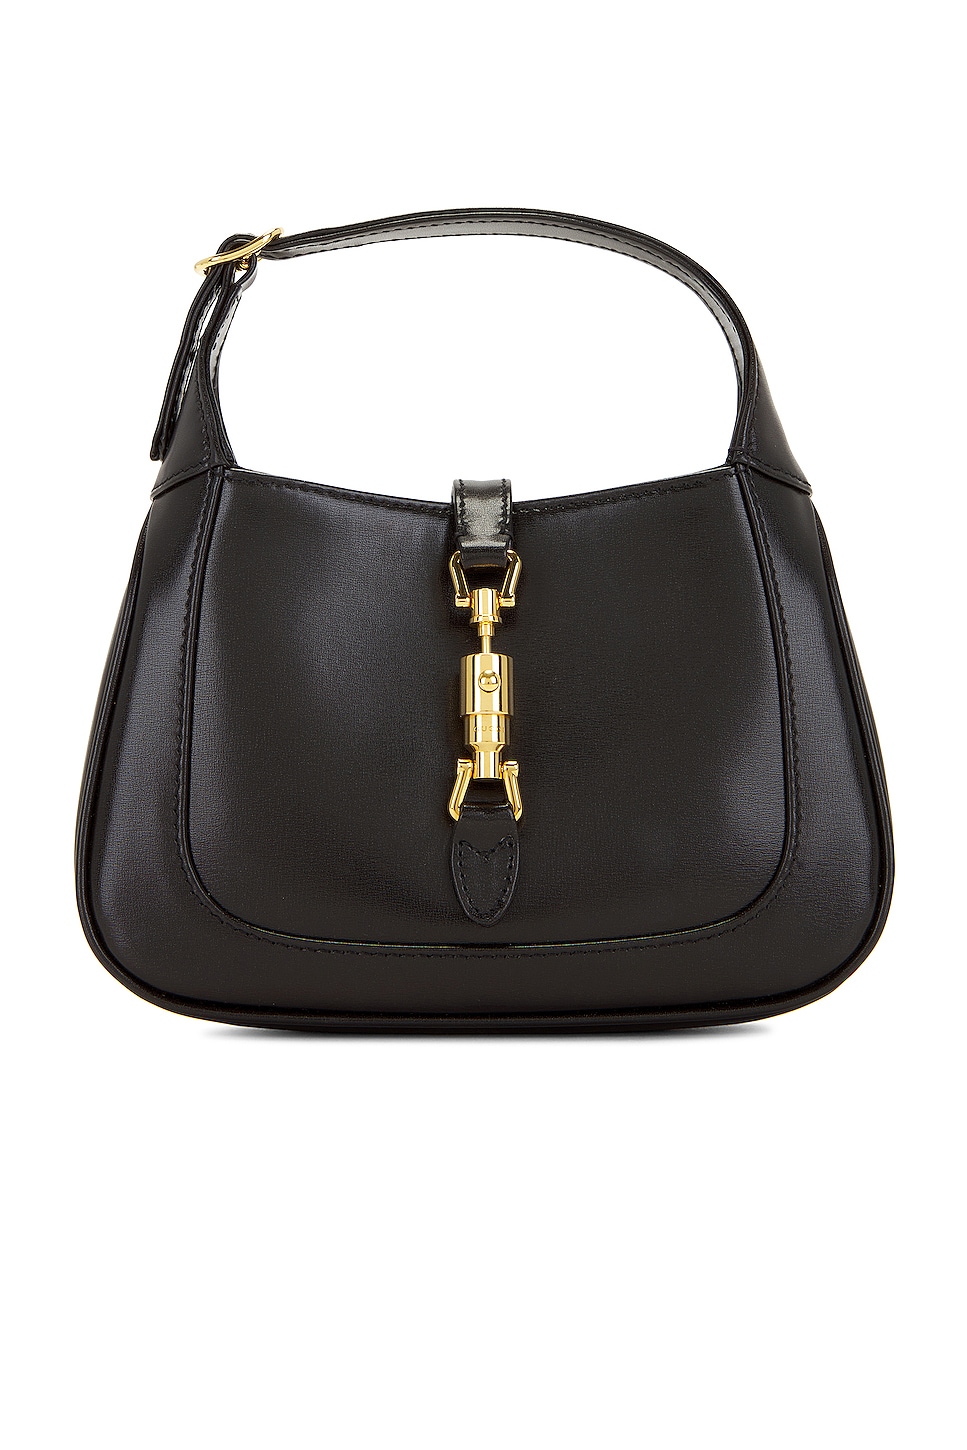 FWRD Renew Gucci Jackie 1961 Leather 2 Way Shoulder Bag in Black